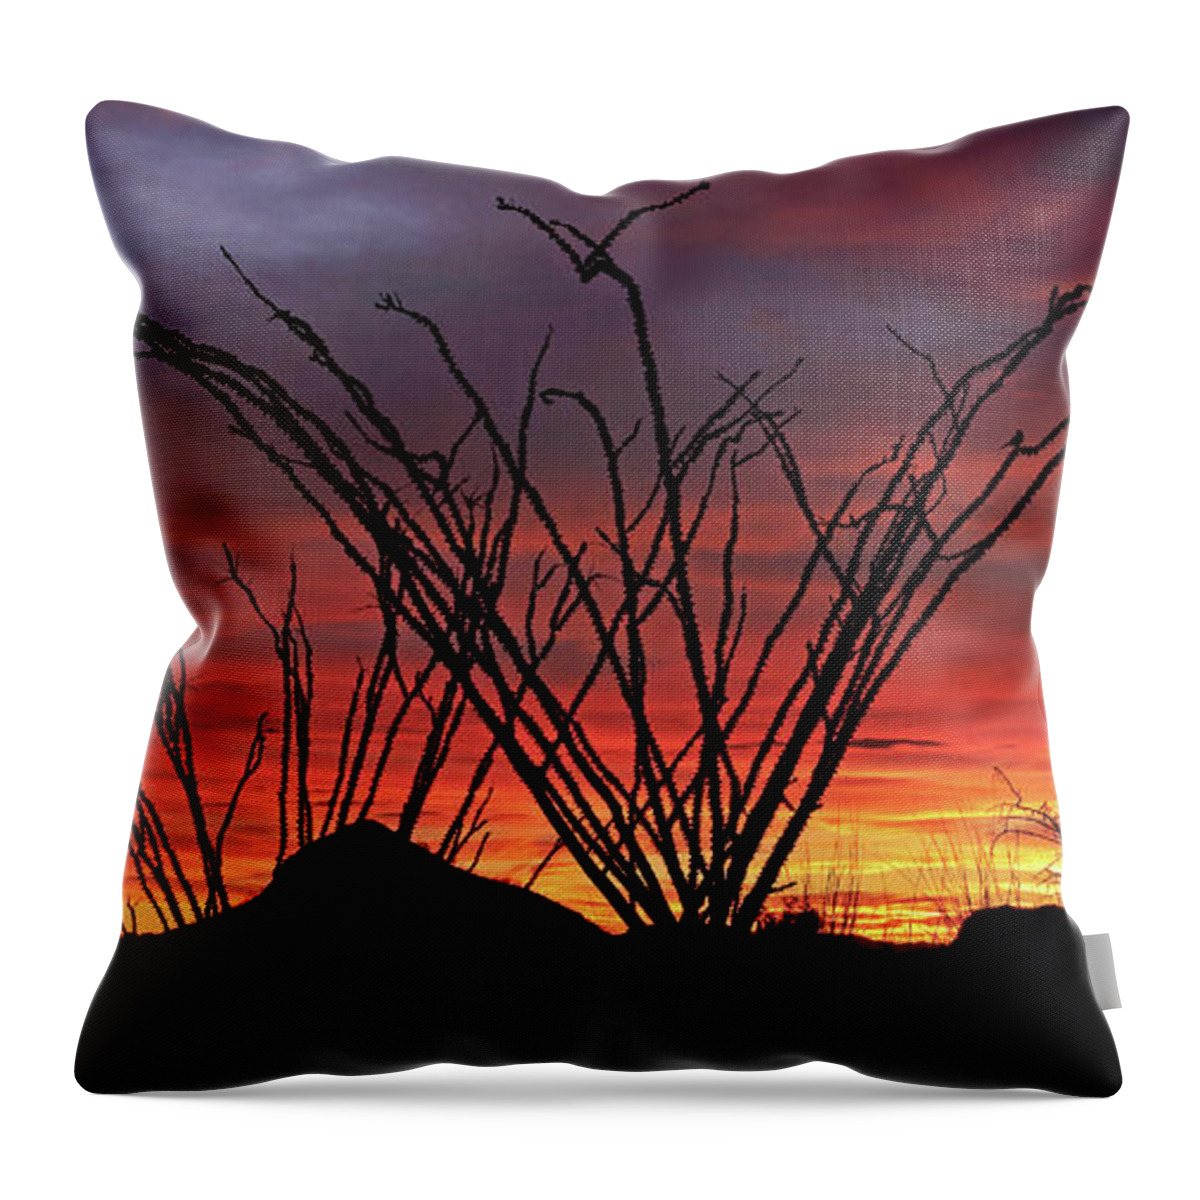 Tom Daniel Throw Pillow featuring the photograph Salero Sunset #9 by Tom Daniel